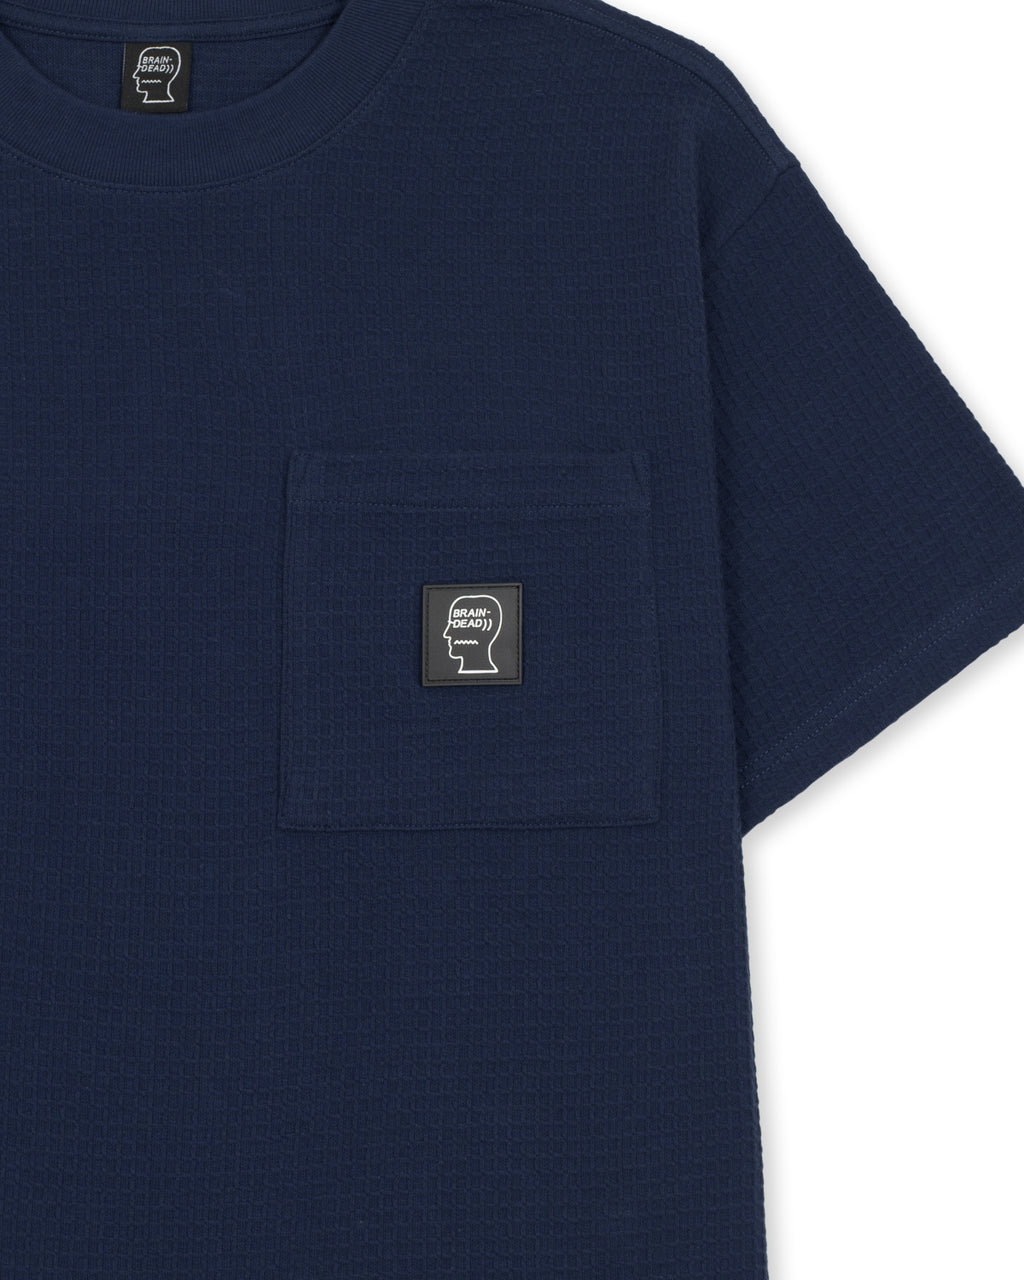 Waffle Knit Mockneck Pocket Shirt W/ PVS - Navy 3